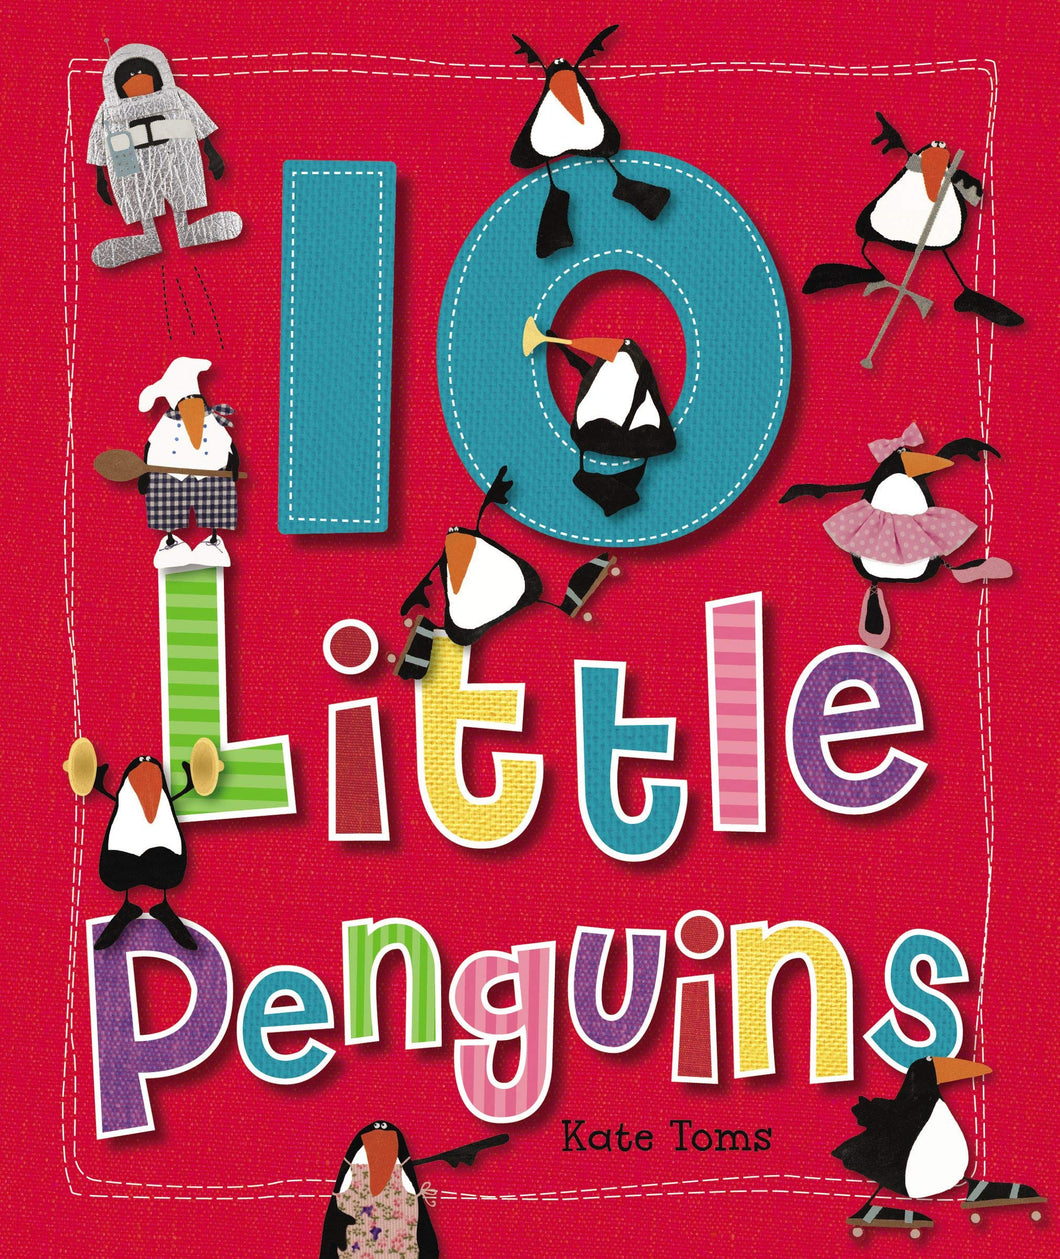 MBI 10 LITTLE PENGUINS - ONLINE SCHOOL BOOK FAIRS 